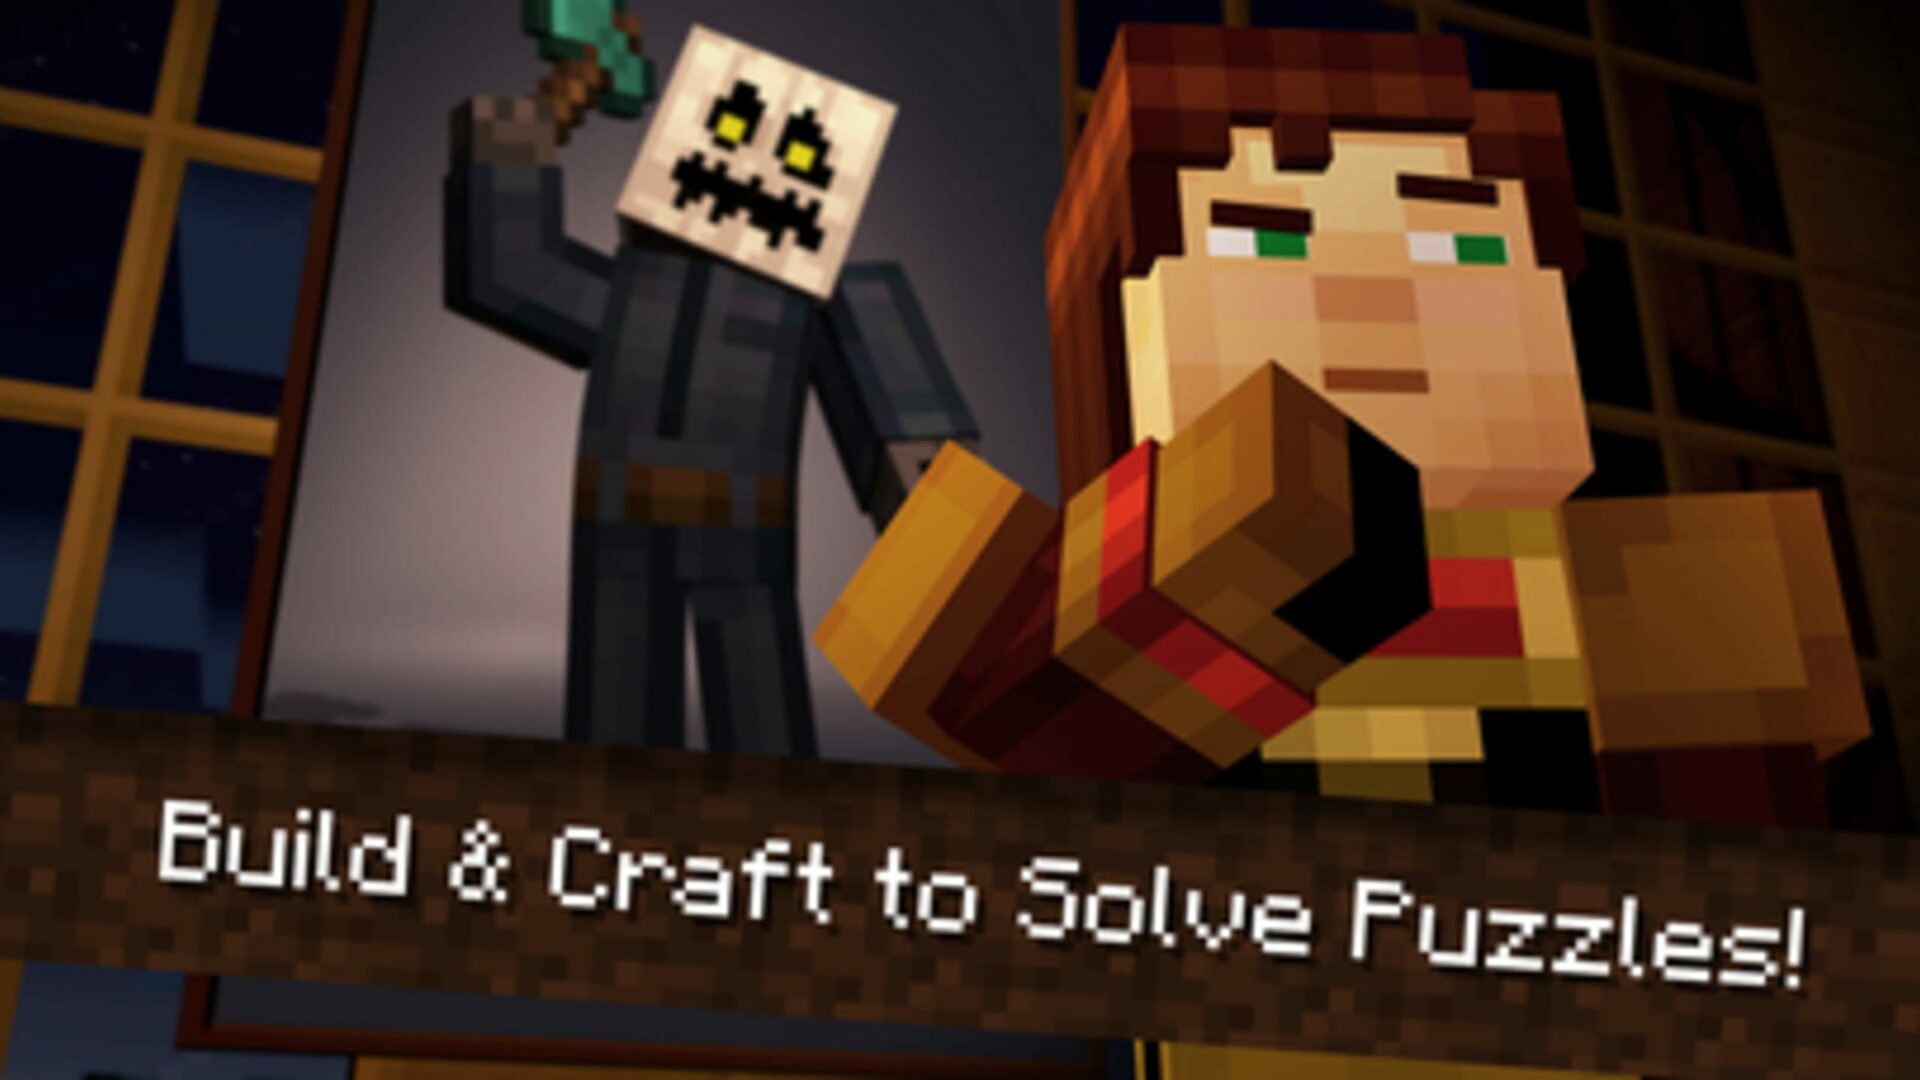 Minecraft: Story Mode a Telltale Games Series Steam Chave Digital